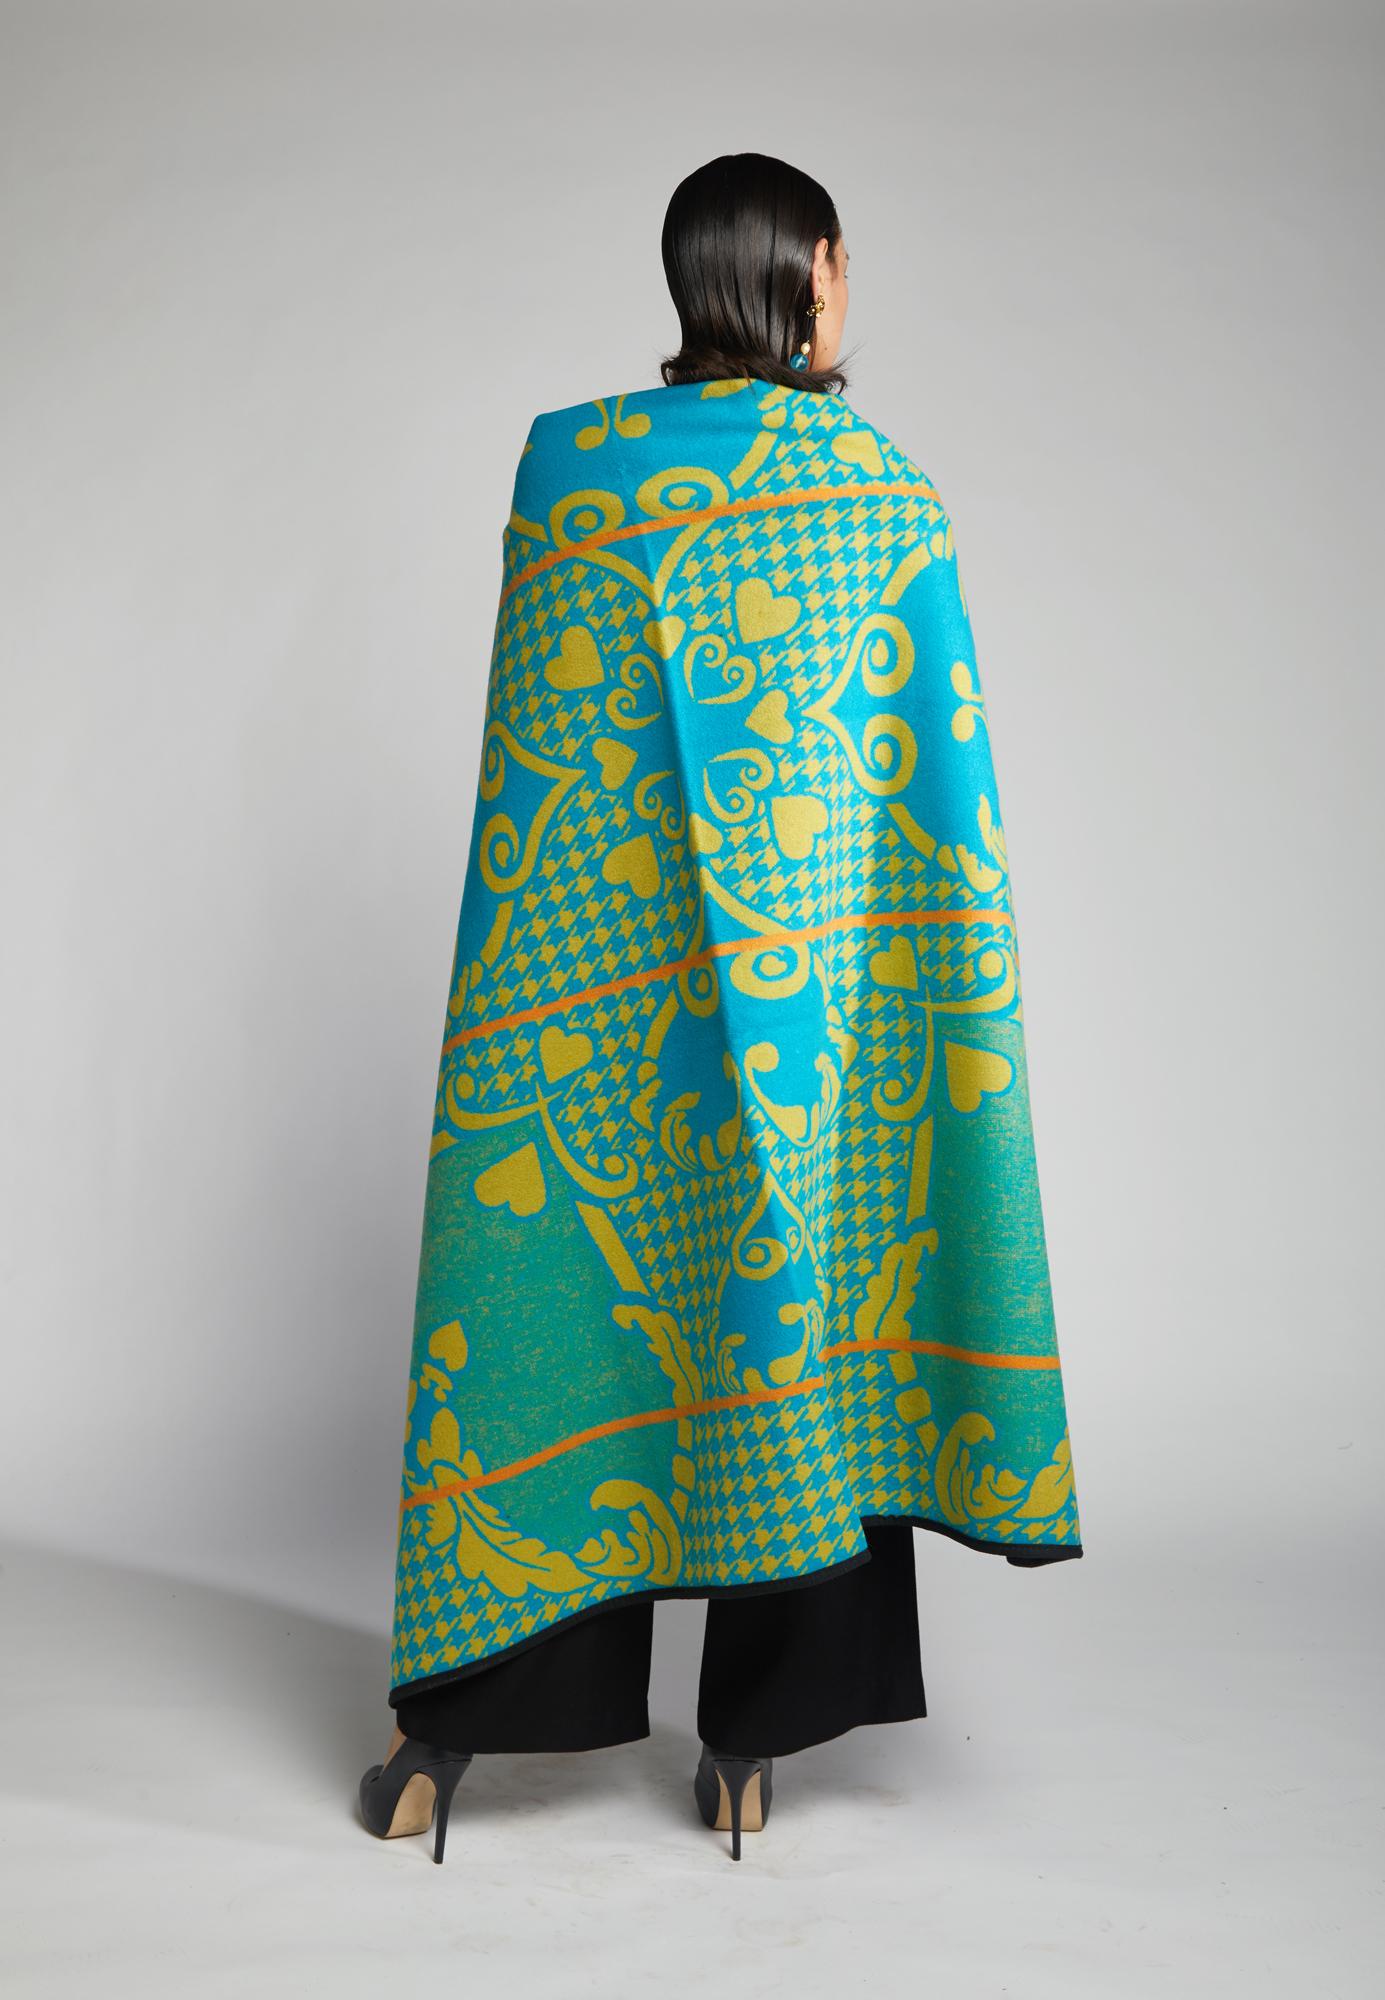 Woven Basotho Heritage Blanket Scarf - Turquoise Mustard Heart For Sale